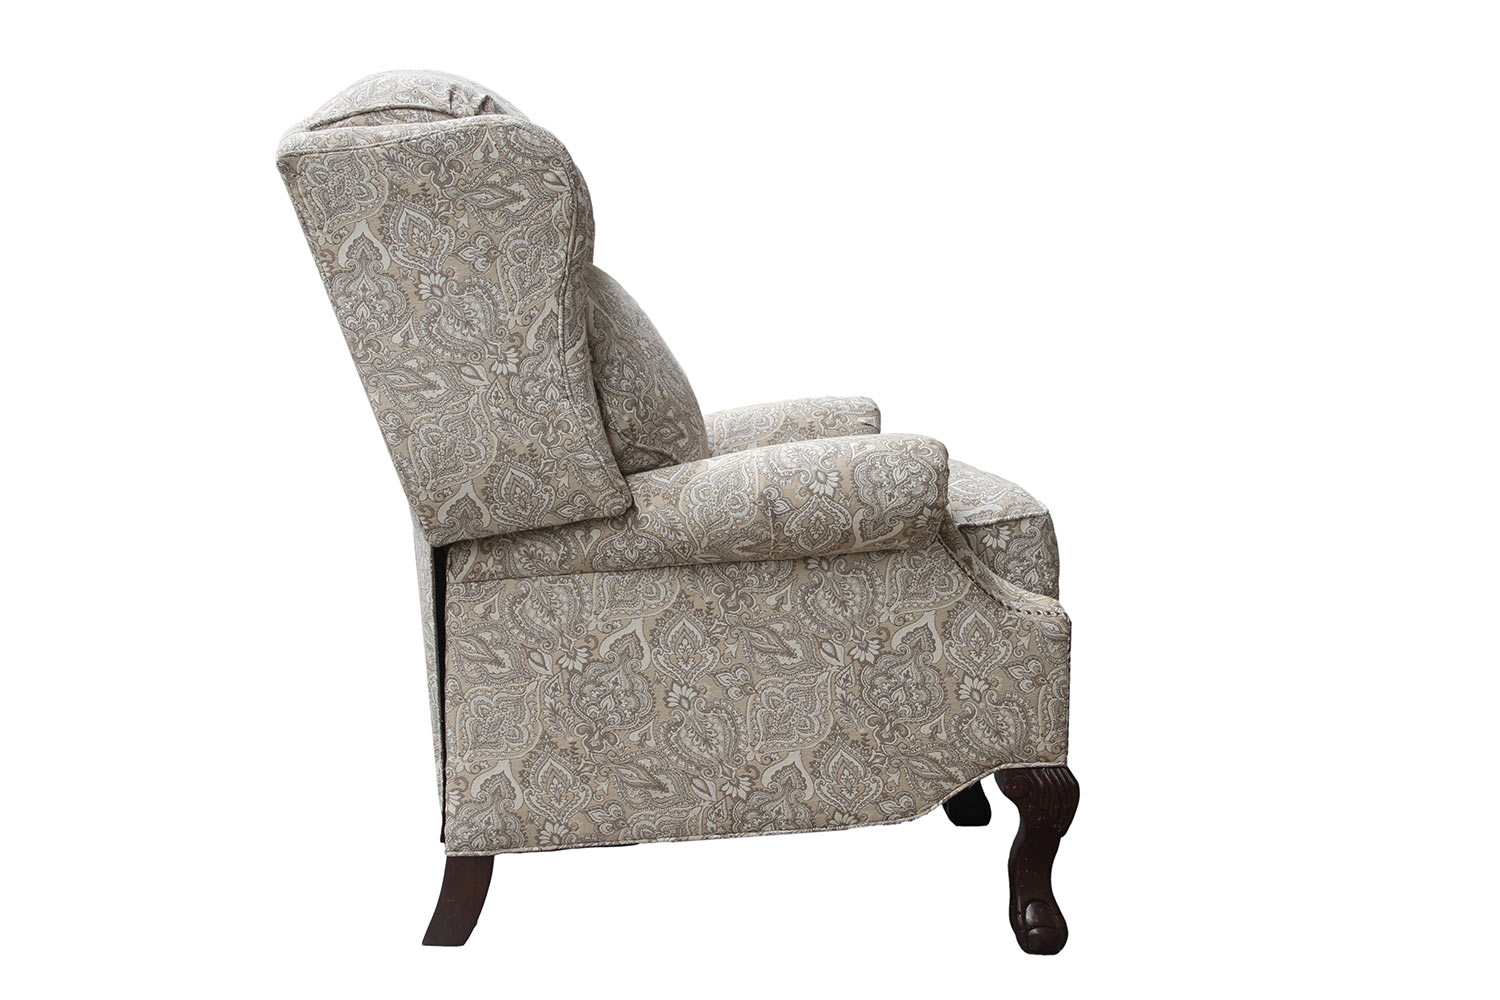 Barcalounger Danbury Recliner Chair - Rustic Doe fabric